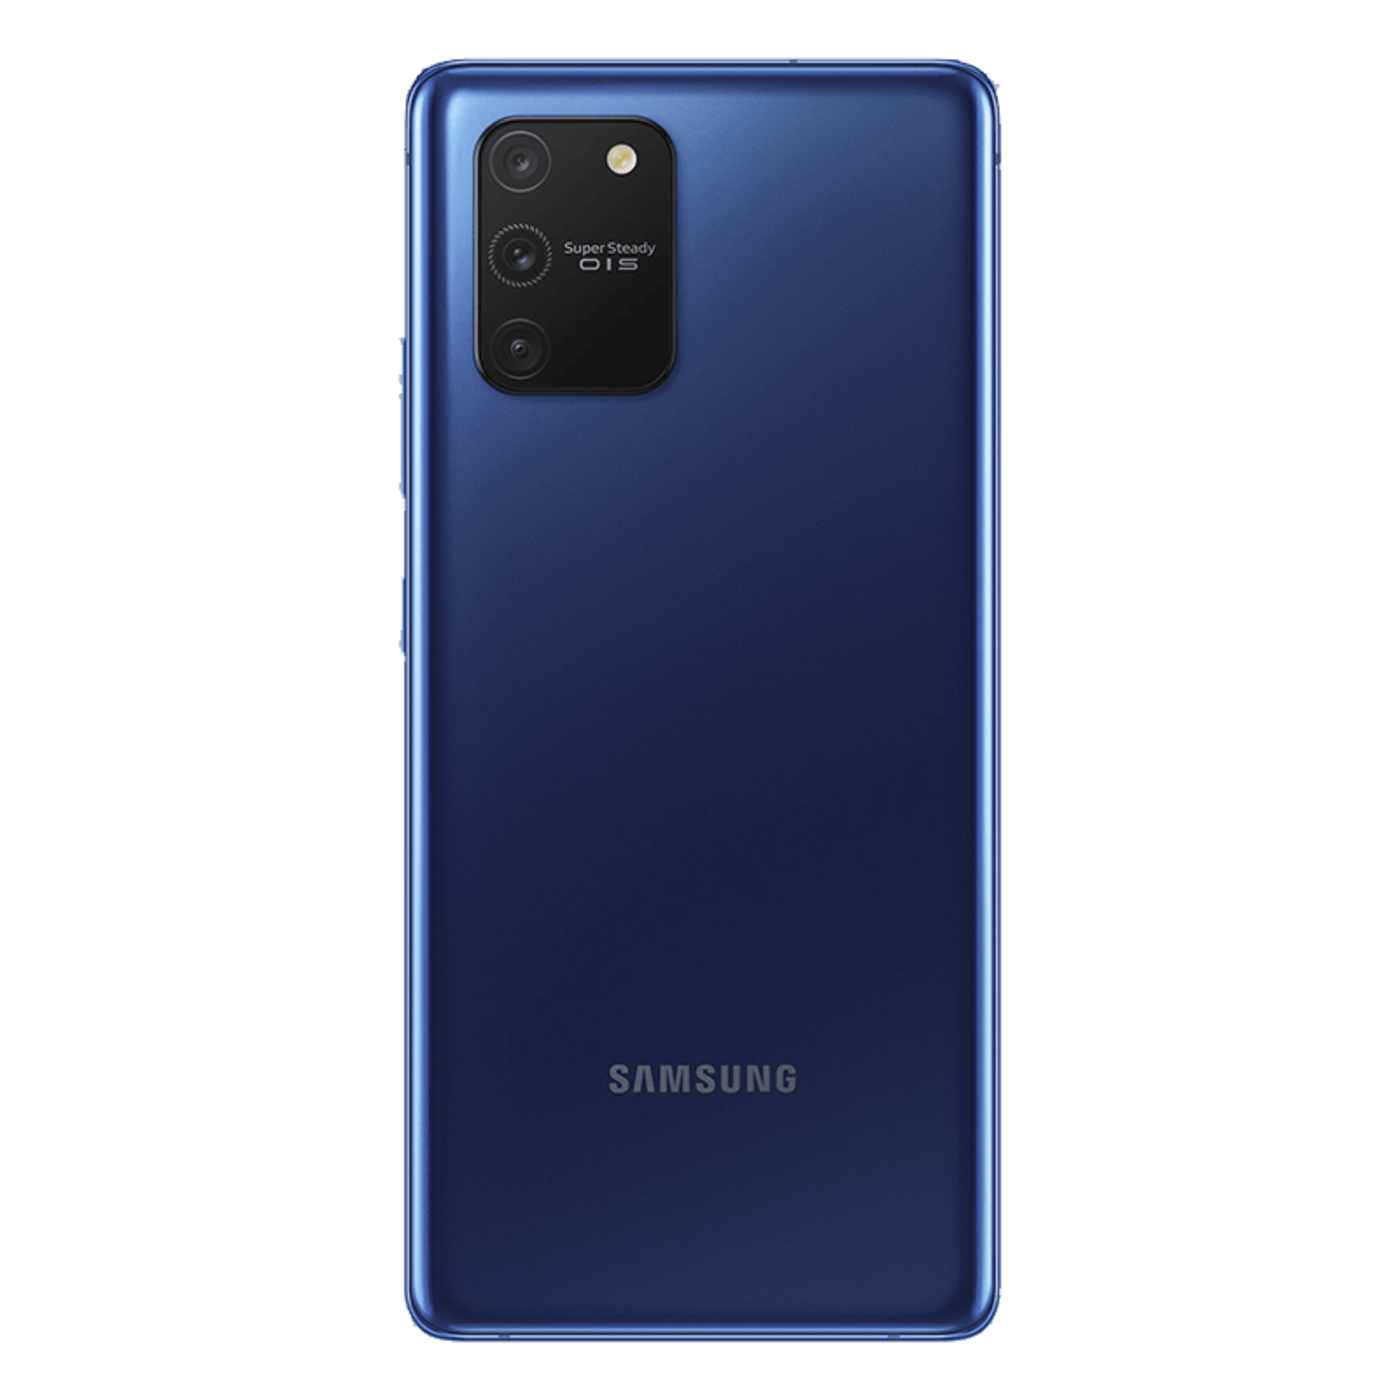 Celular SAMSUNG Galaxy S10 LITE 128 GB Azul